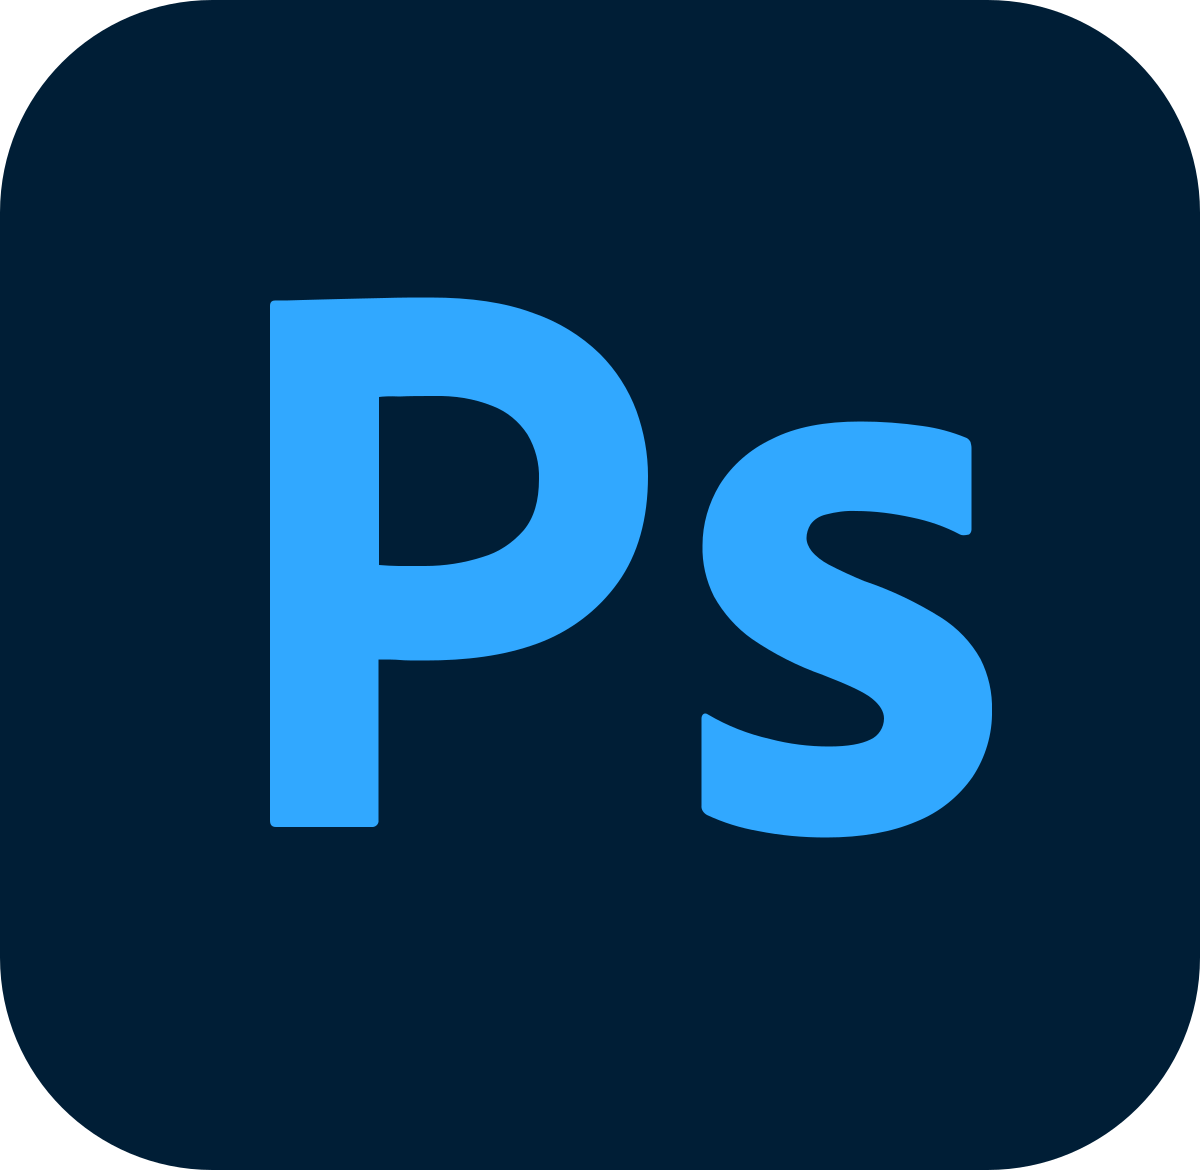 NY CHANS! Grundkurs i Adobe Photoshop – digital heldagskurs